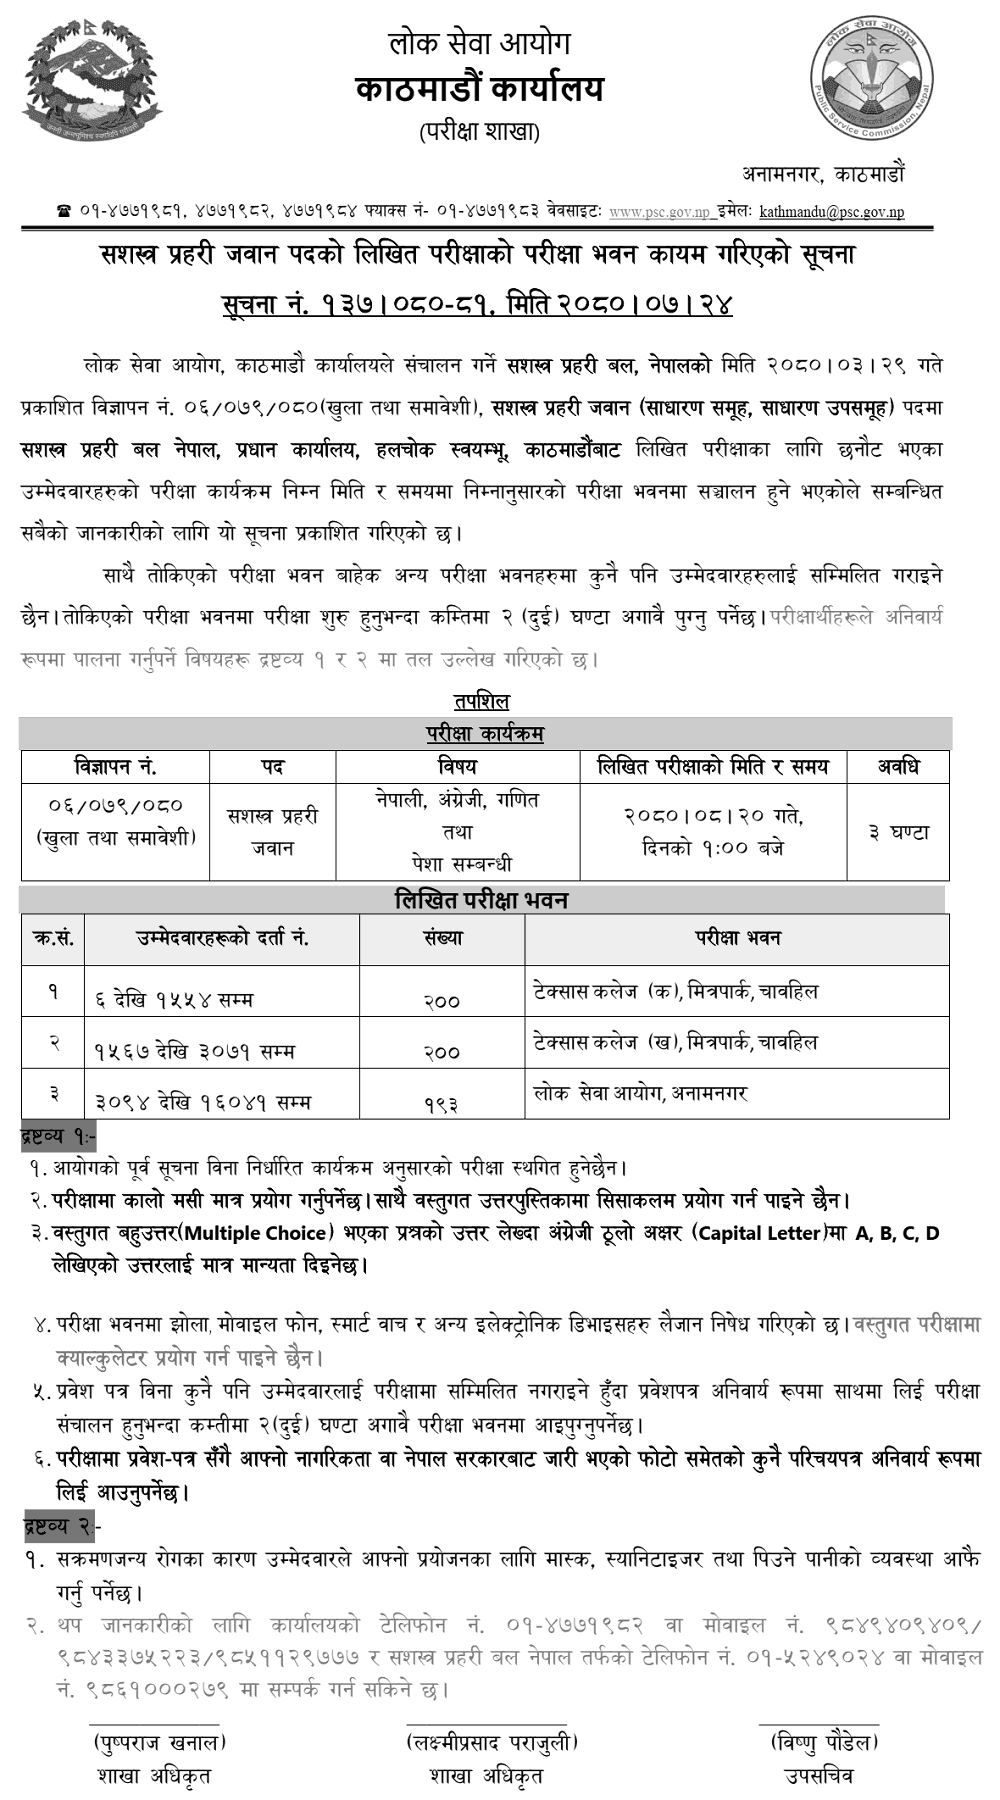 APF Nepal Jawan Post Kathmandu Written Exam Center 2080